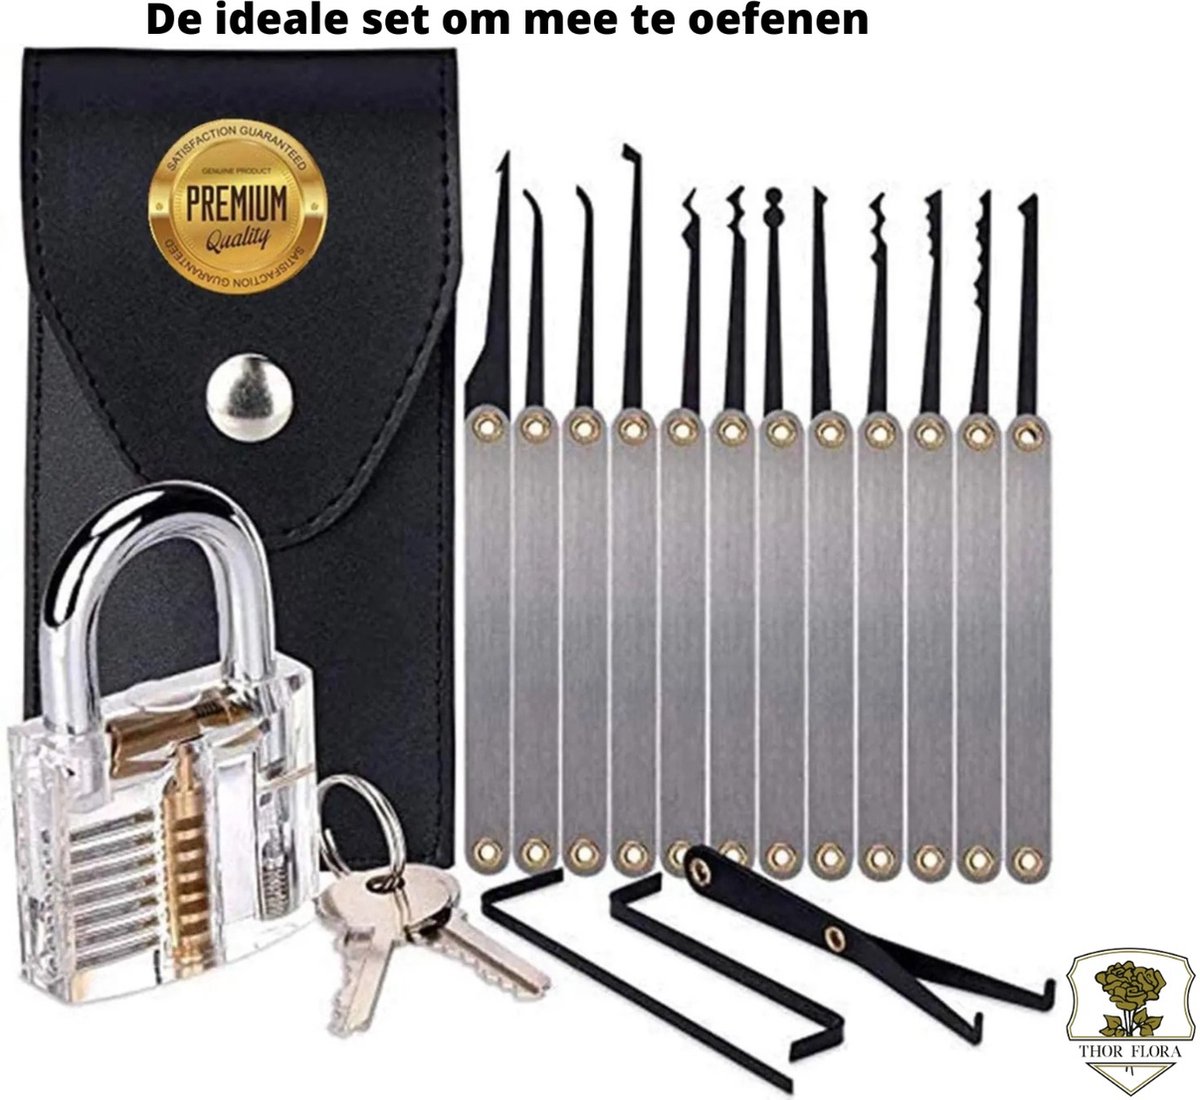 Uitgebreide Lockpick Set met 3 sloten - Lockpicking - Lock pick gereedschap  tools 